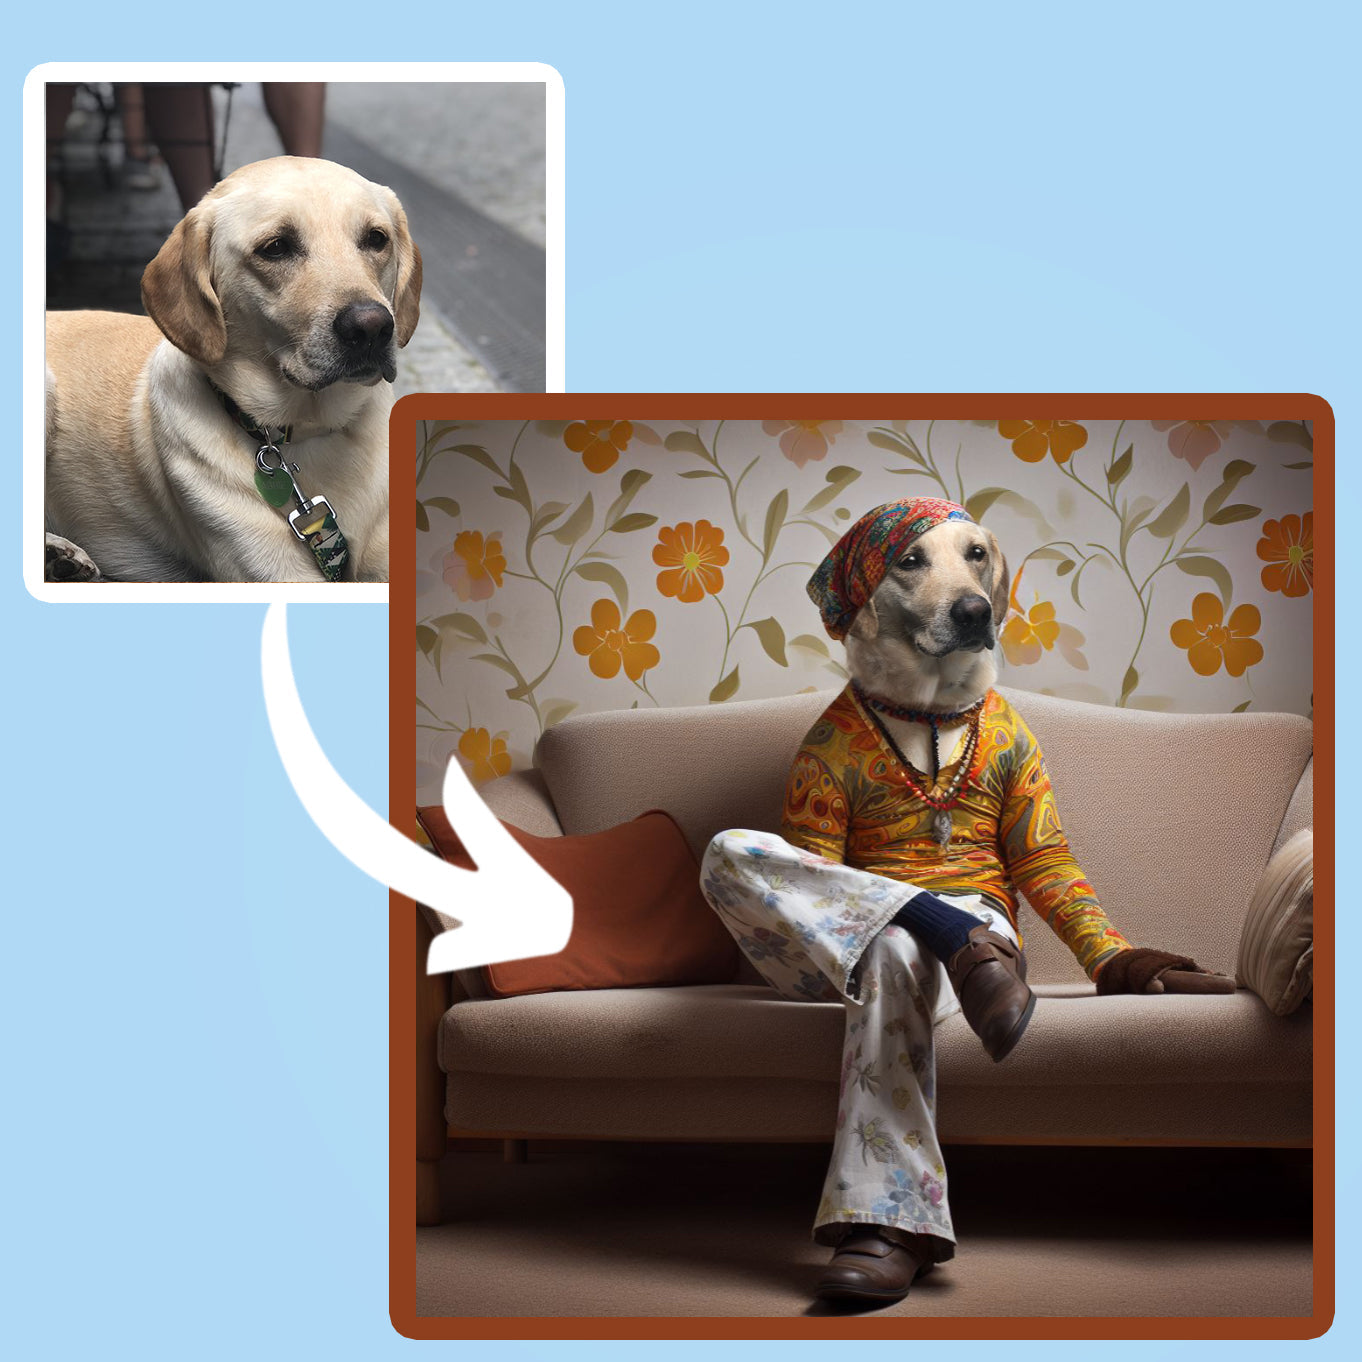 A reto pet portrait 1960s a golden labrador dog sitting like a human on a sofa